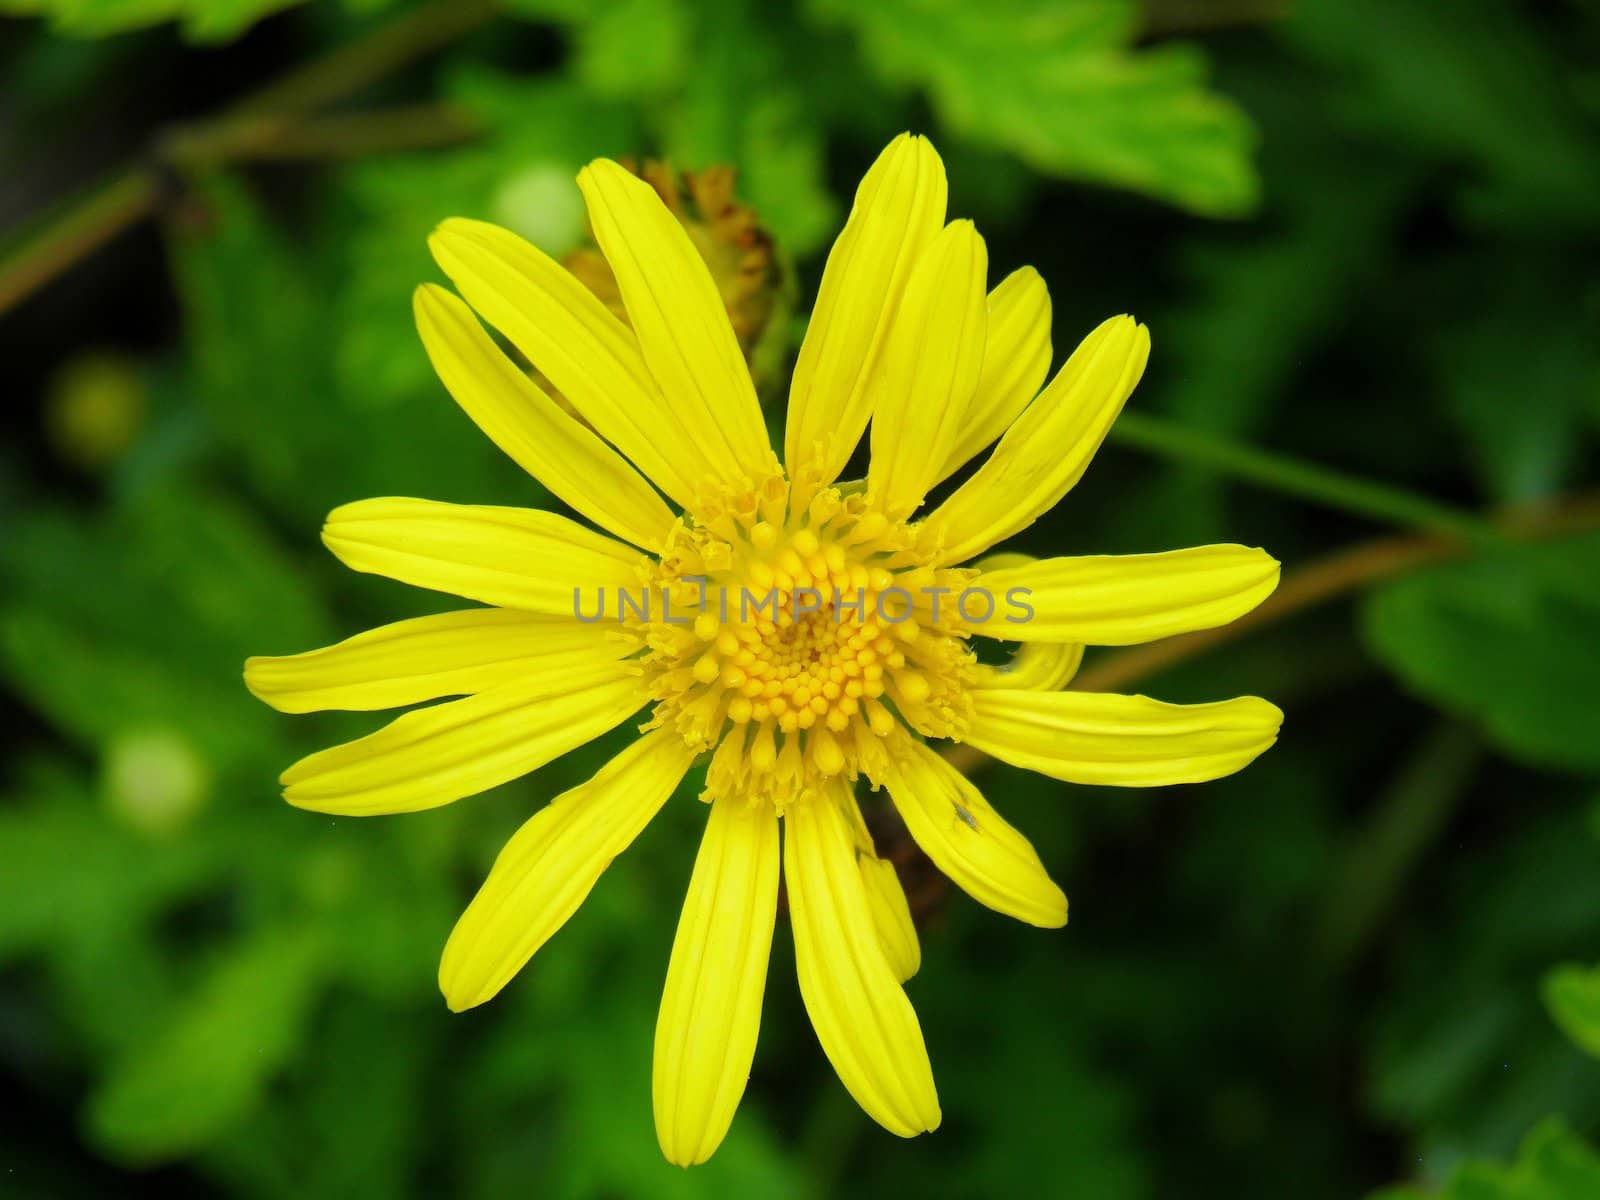 Yellow bush daisy flower by alentejano